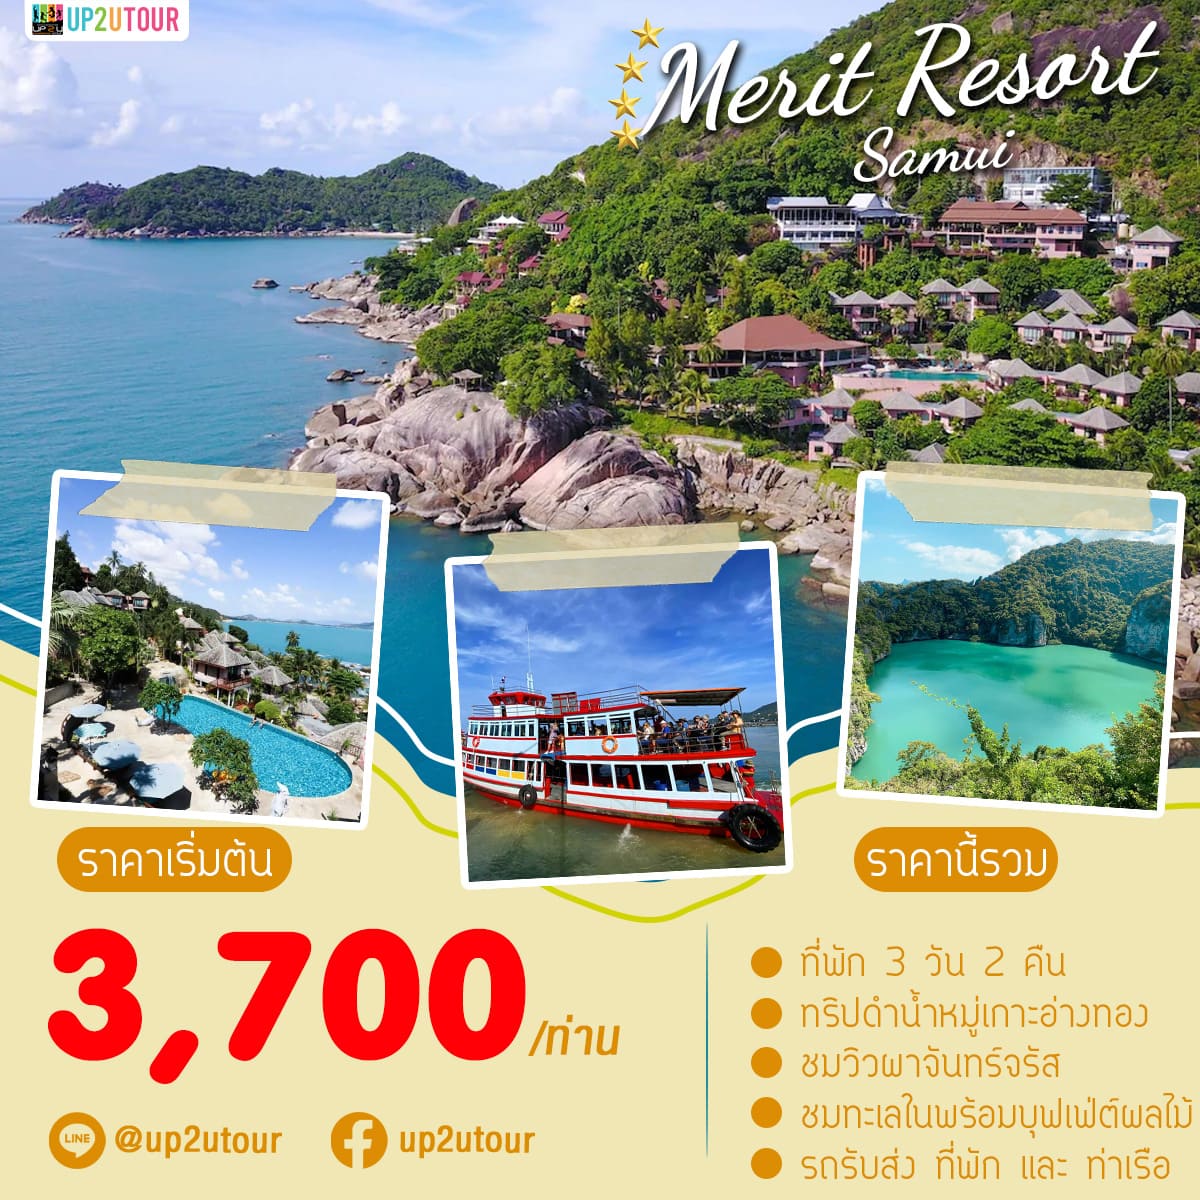 Merit resort เกาะสมุย ราคาเริ่มต้นที่ 3,700 บาท/ท่าน